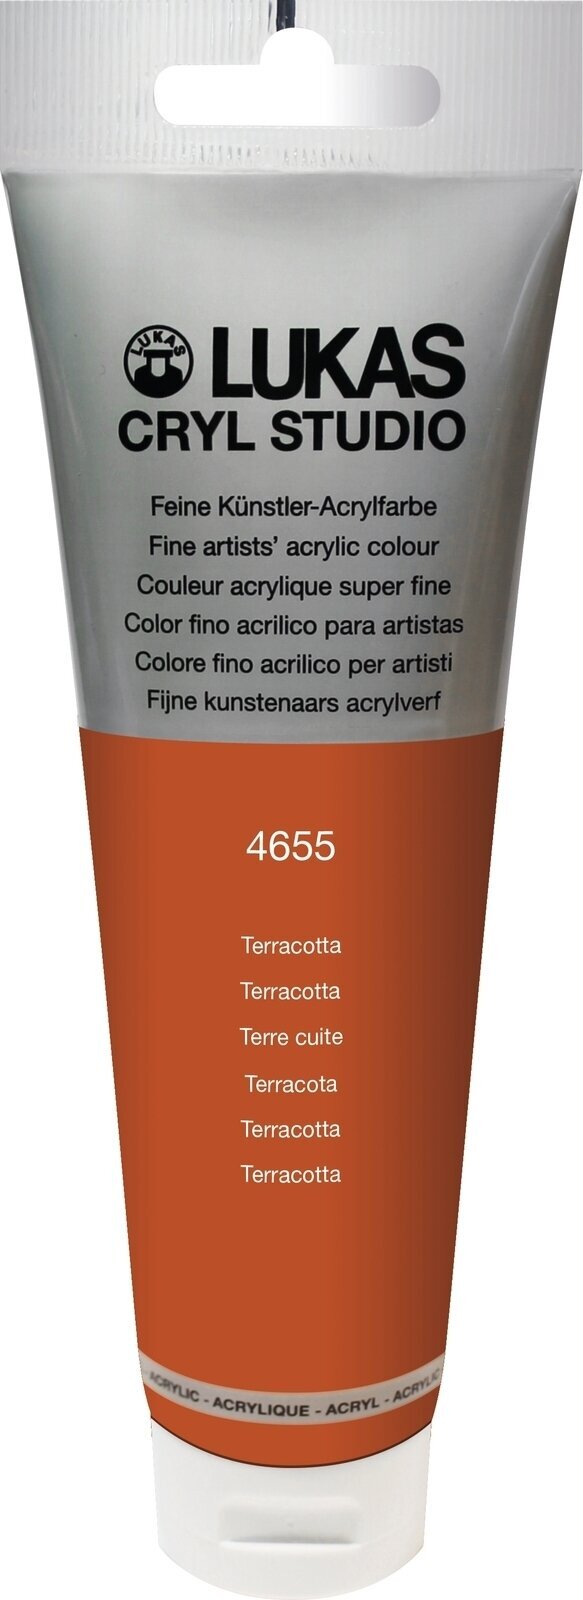 Akrylová barva Lukas Cryl Studio Acrylic Paint Plastic Tube Akrylová barva Terracotta 125 ml 1 ks